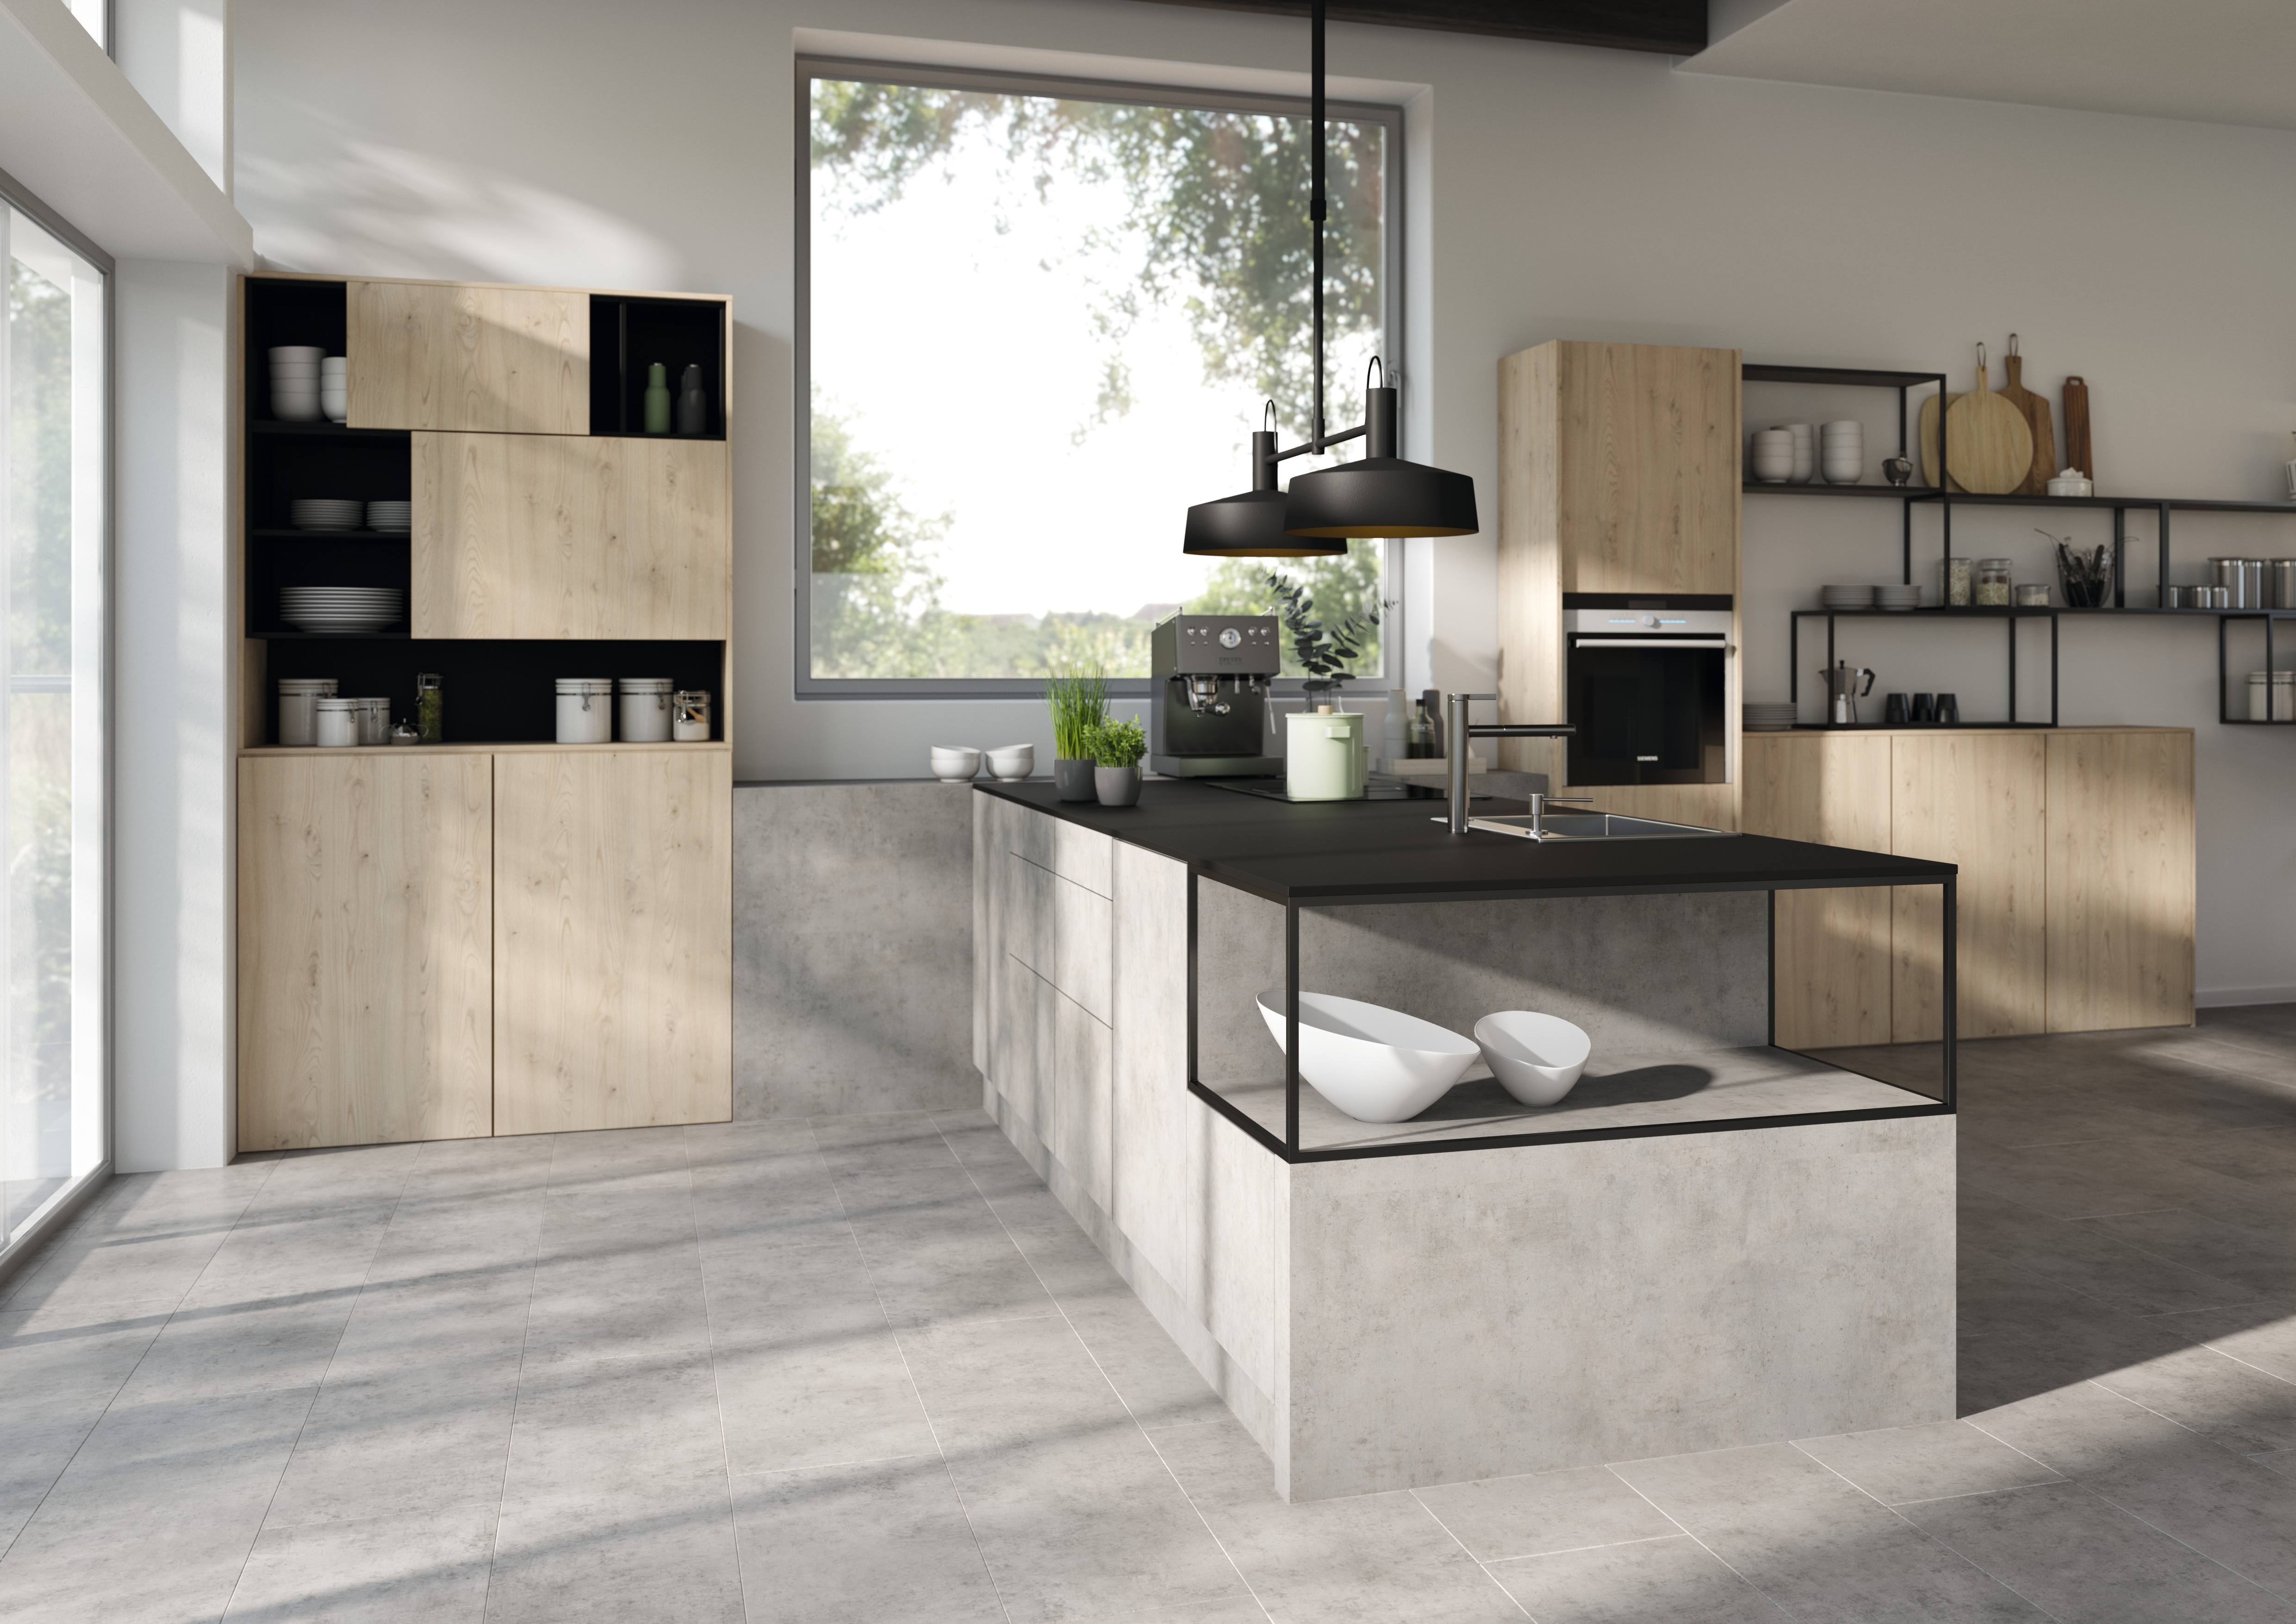 Decor Match kitchen: Light Grey Chicago Concrete. Cabinet front: Eurodekor chipboard | Flooring: Laminate Flooring Aqua+